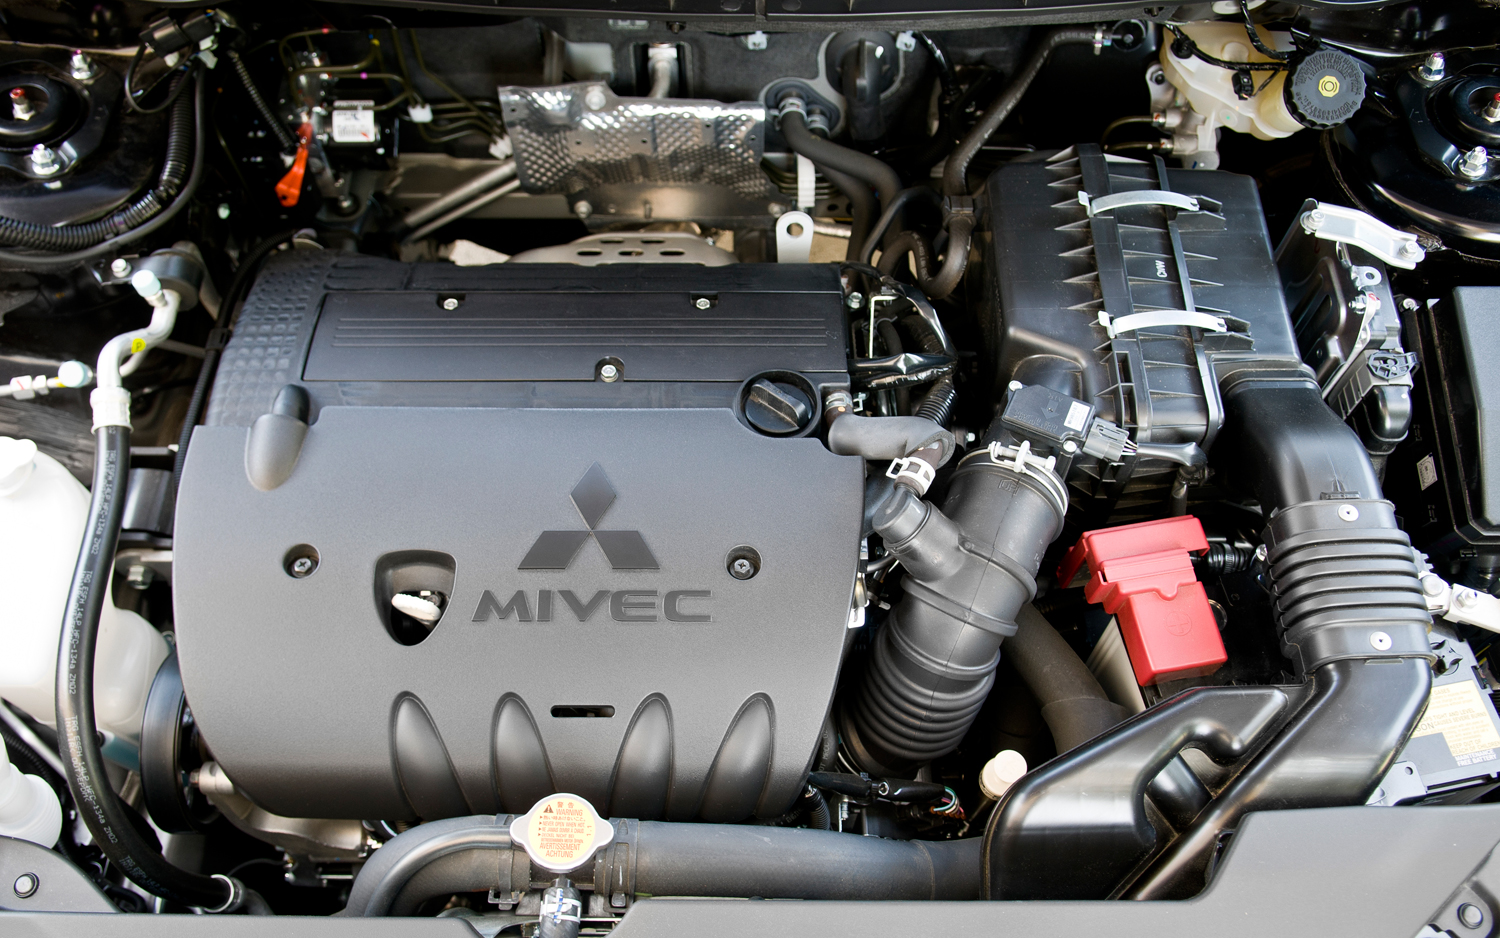 Двигатель мицубиси аутлендер хл. Мотор 2.4 Митсубиси Аутлендер. Двигатель Мицубиси Аутлендер 2.0. Двигатель Митсубиси Аутлендер 4. Мотор Mitsubishi Outlander XL 2.0.